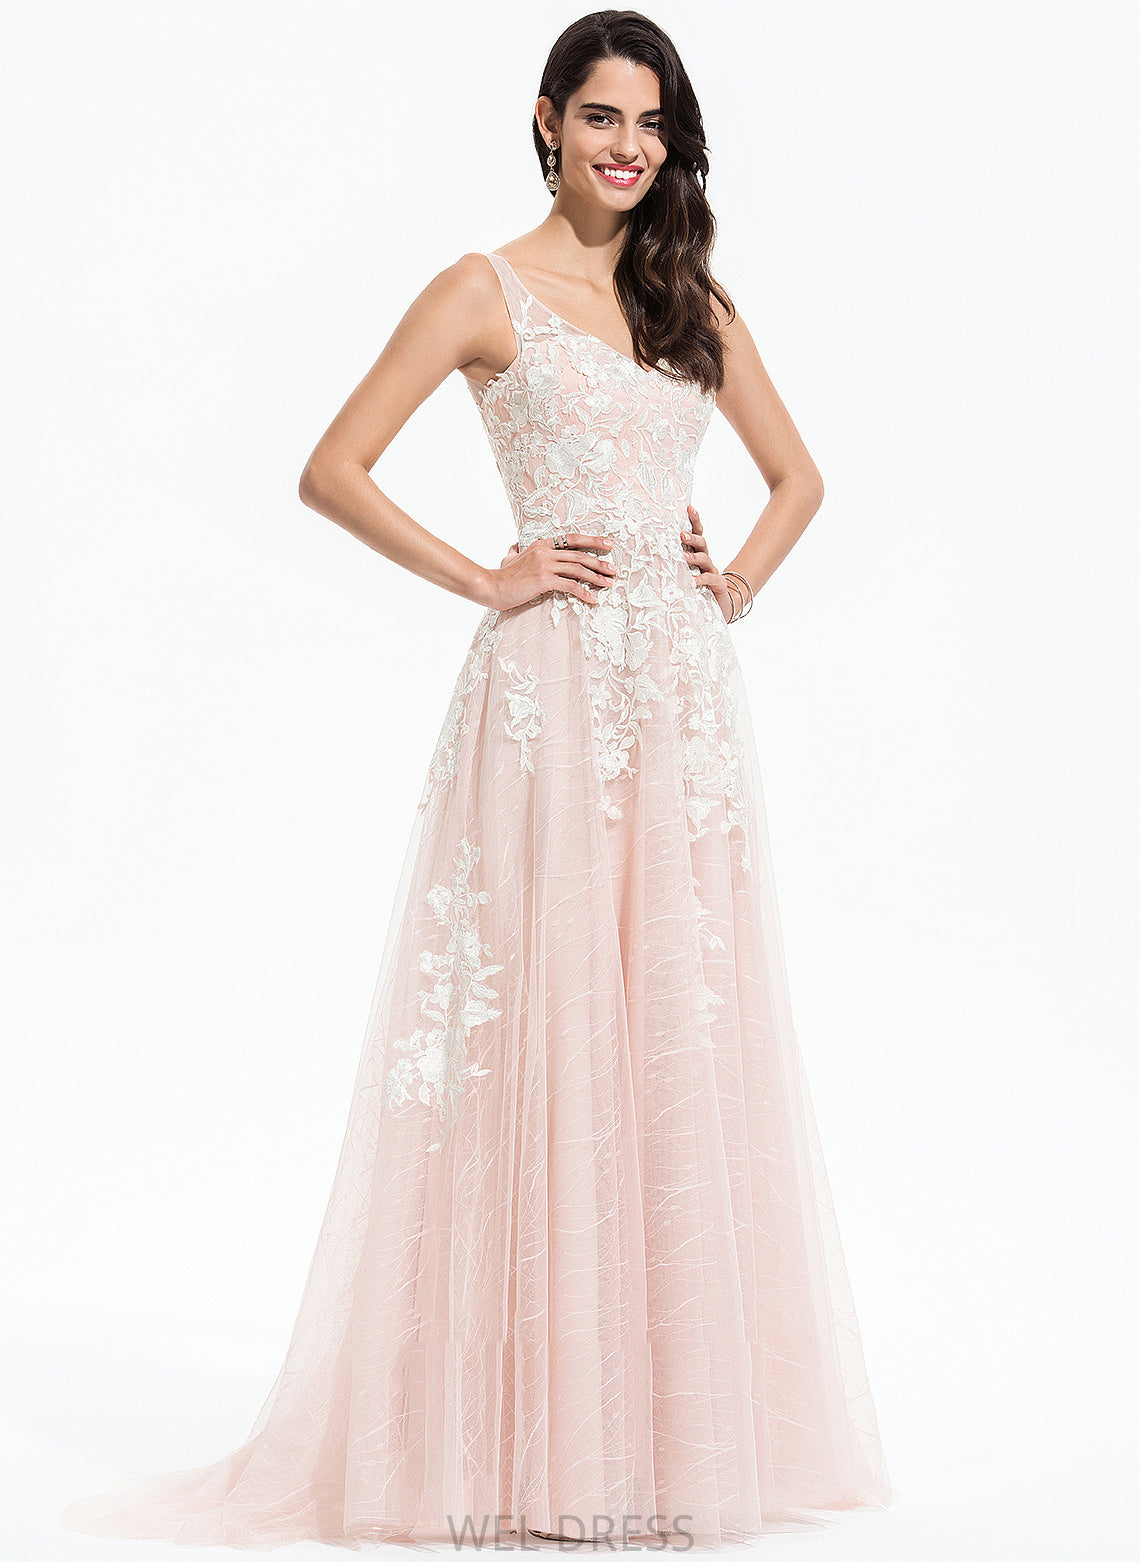 Skyla A-Line Wedding Wedding Dresses V-neck Lace Train Tulle Sweep Dress With